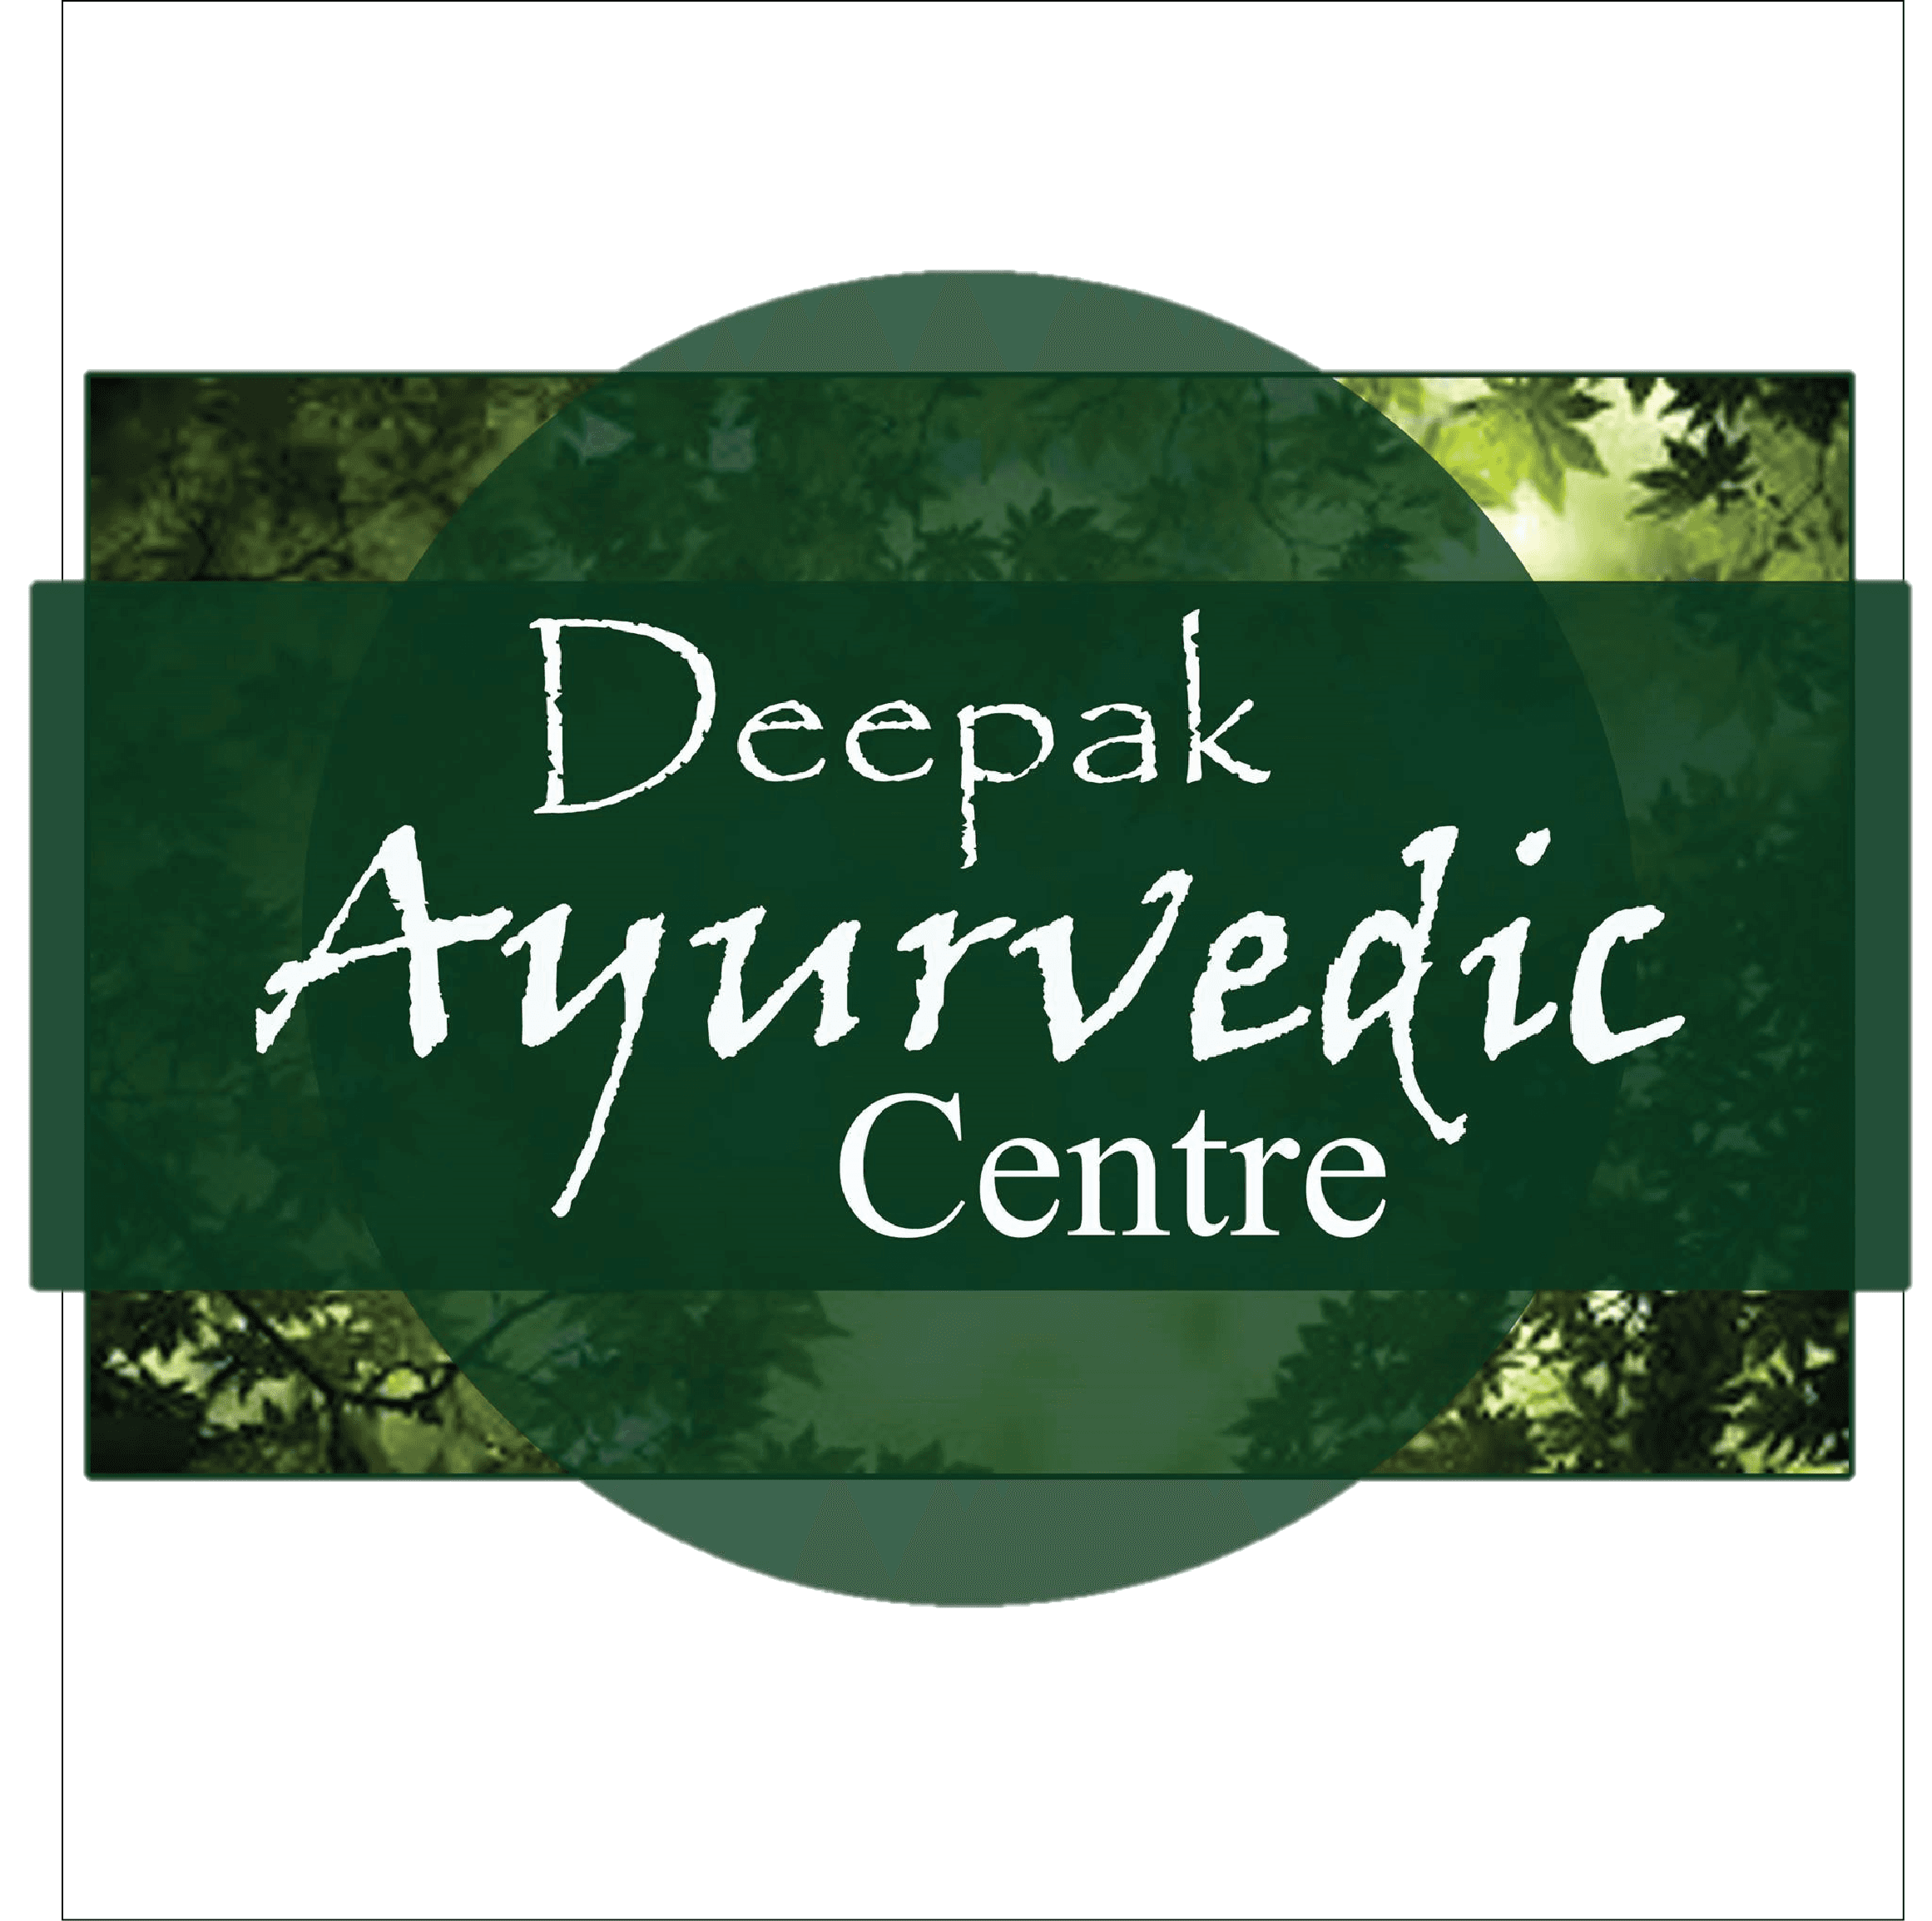 Deepak Ayurvedic Centre